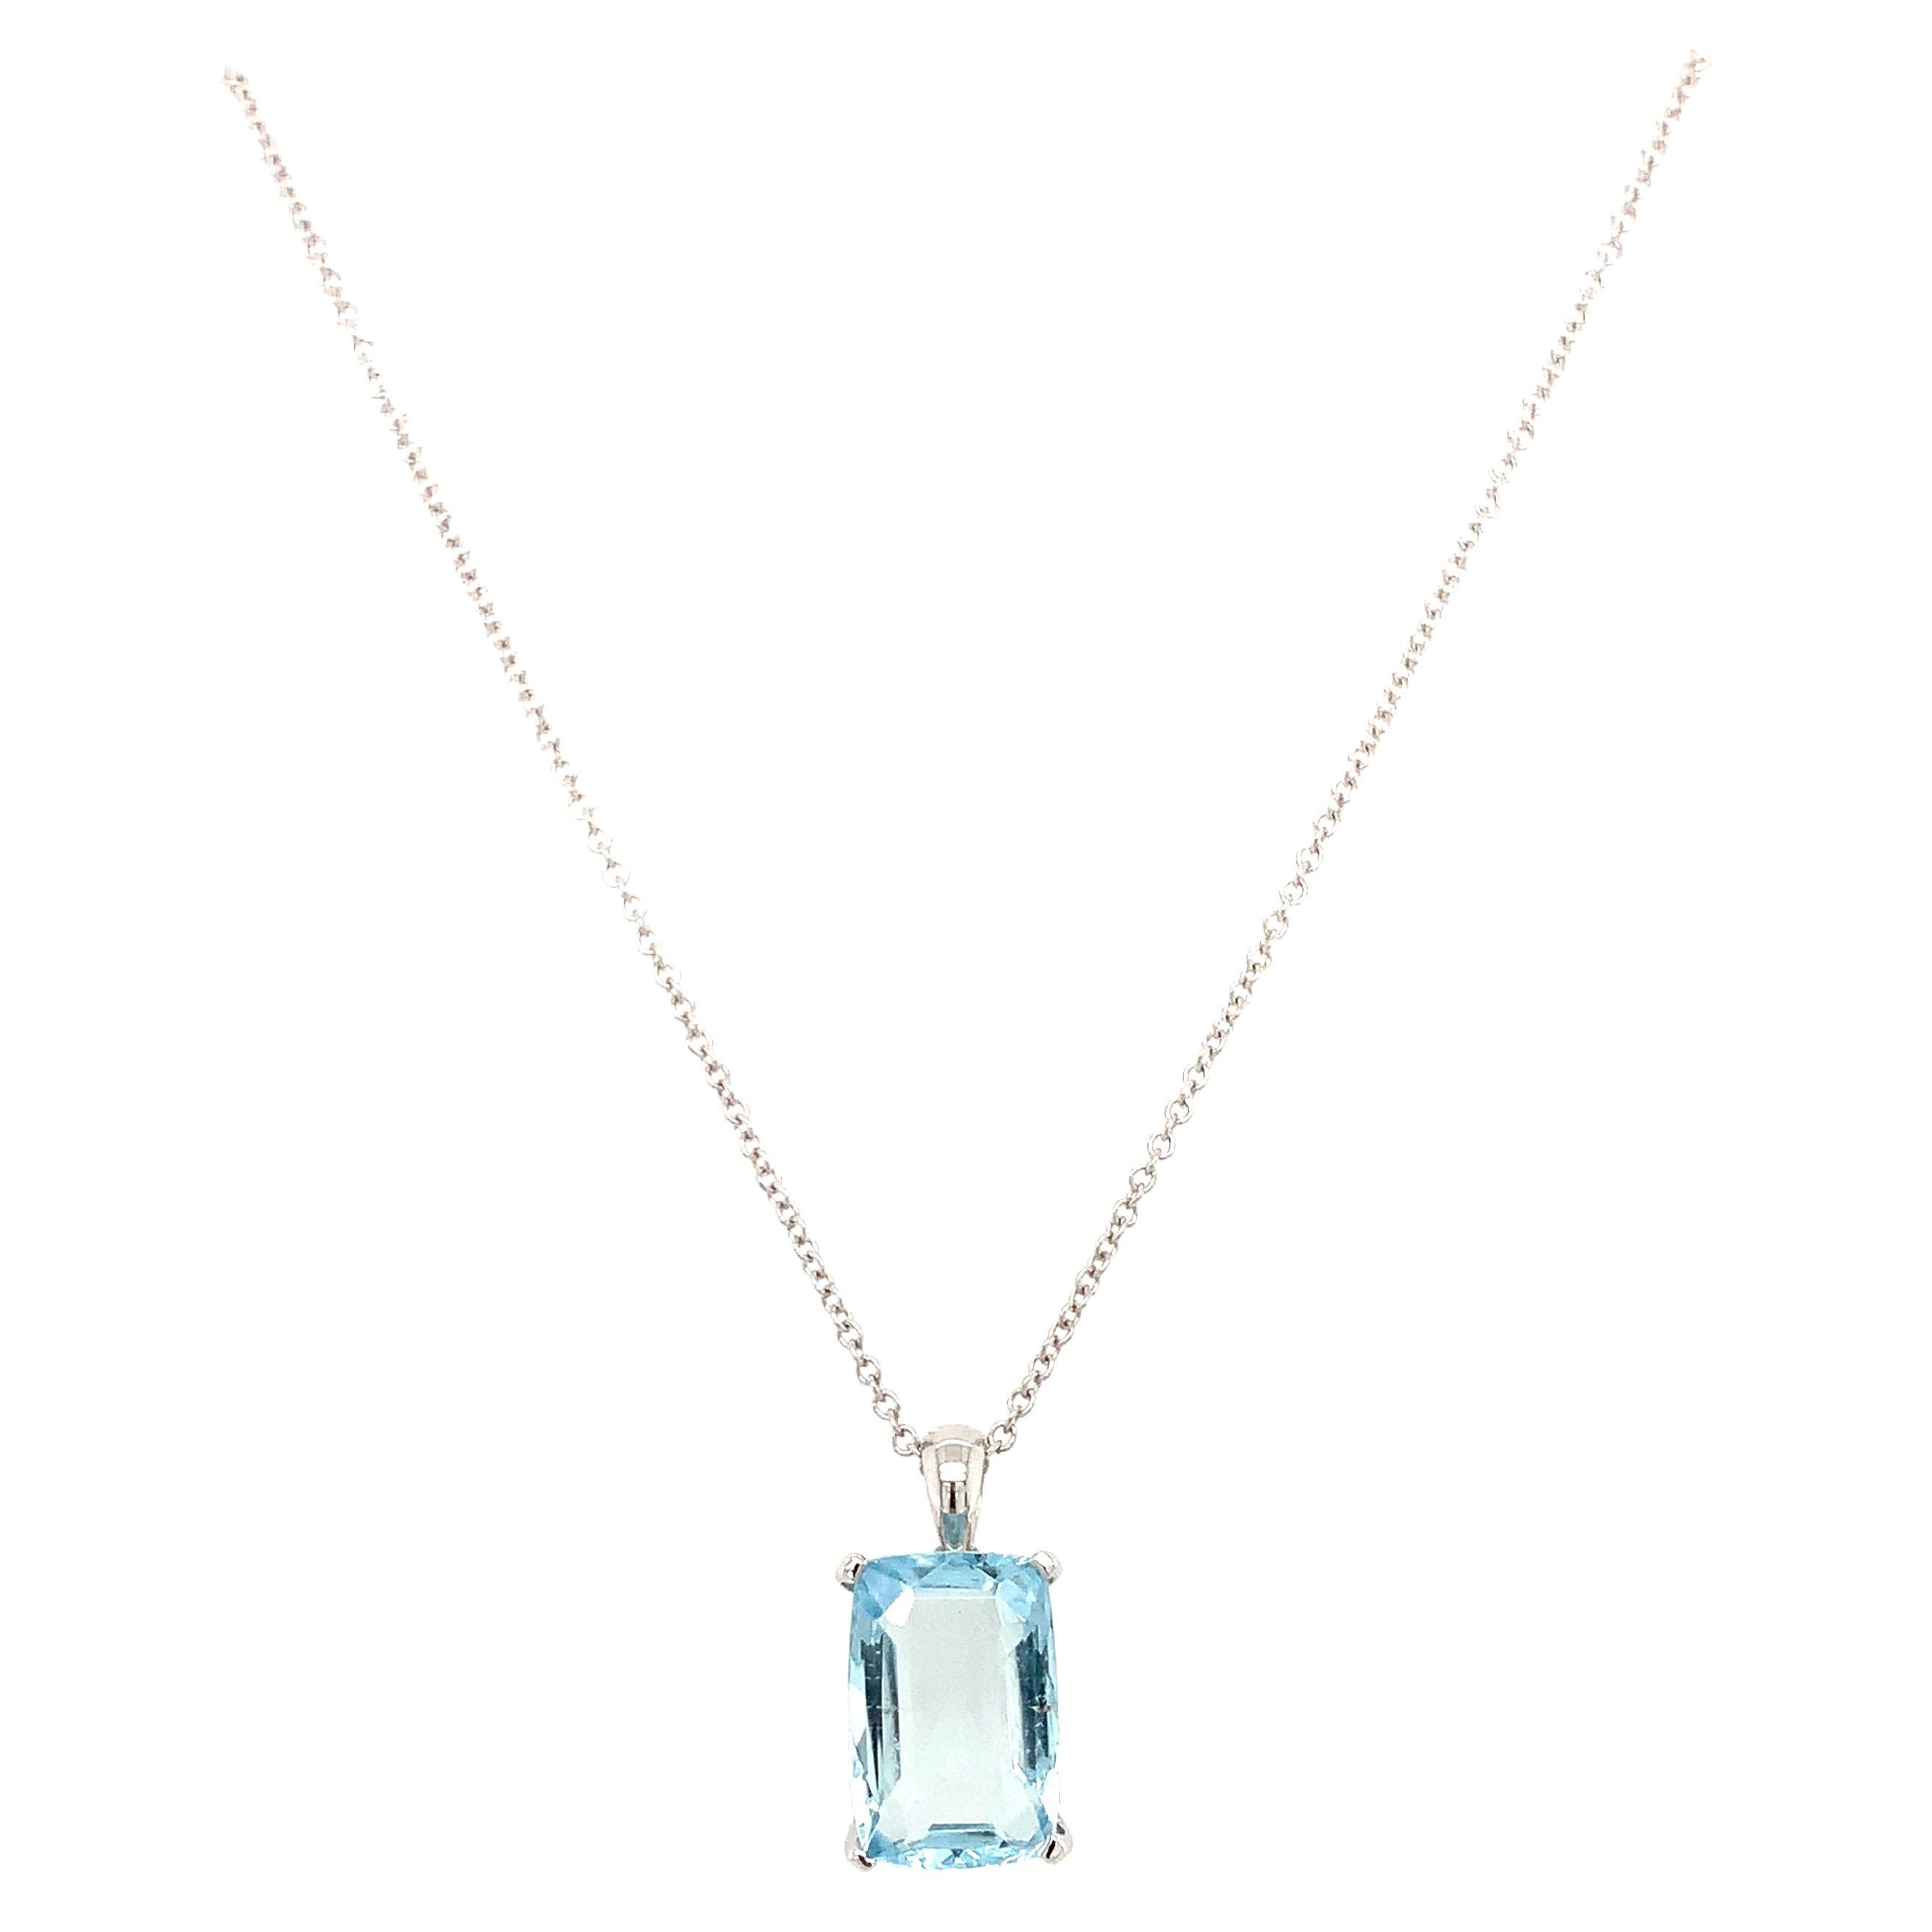 Aquamarine emerald cut solitaire pendant necklace 18k white gold